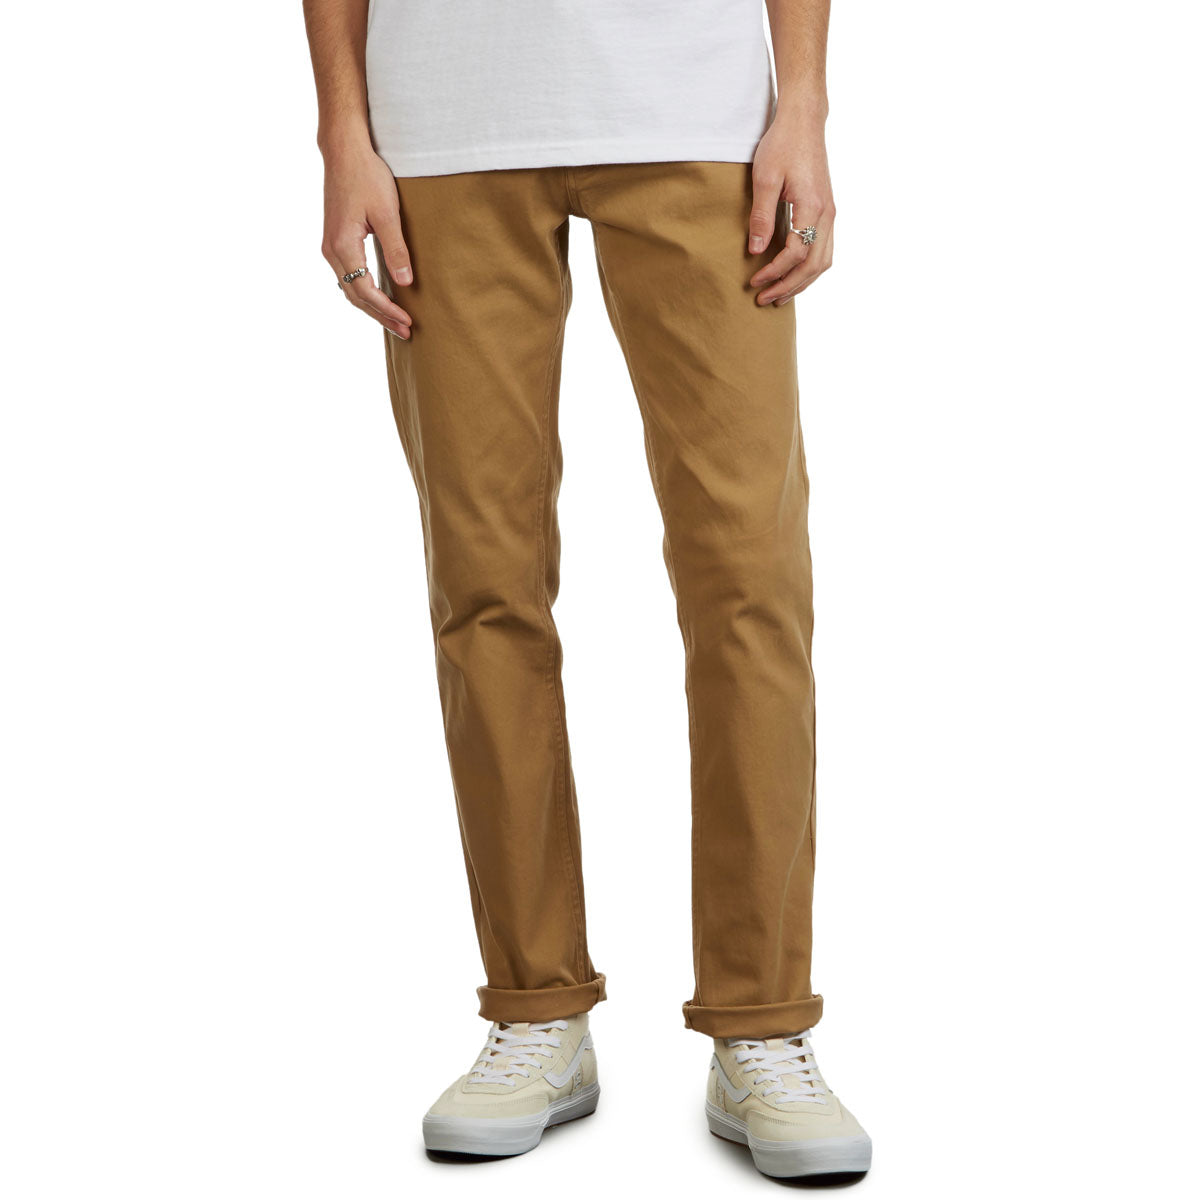 CCS Standard Plus Straight Chino Pants - Khaki image 4